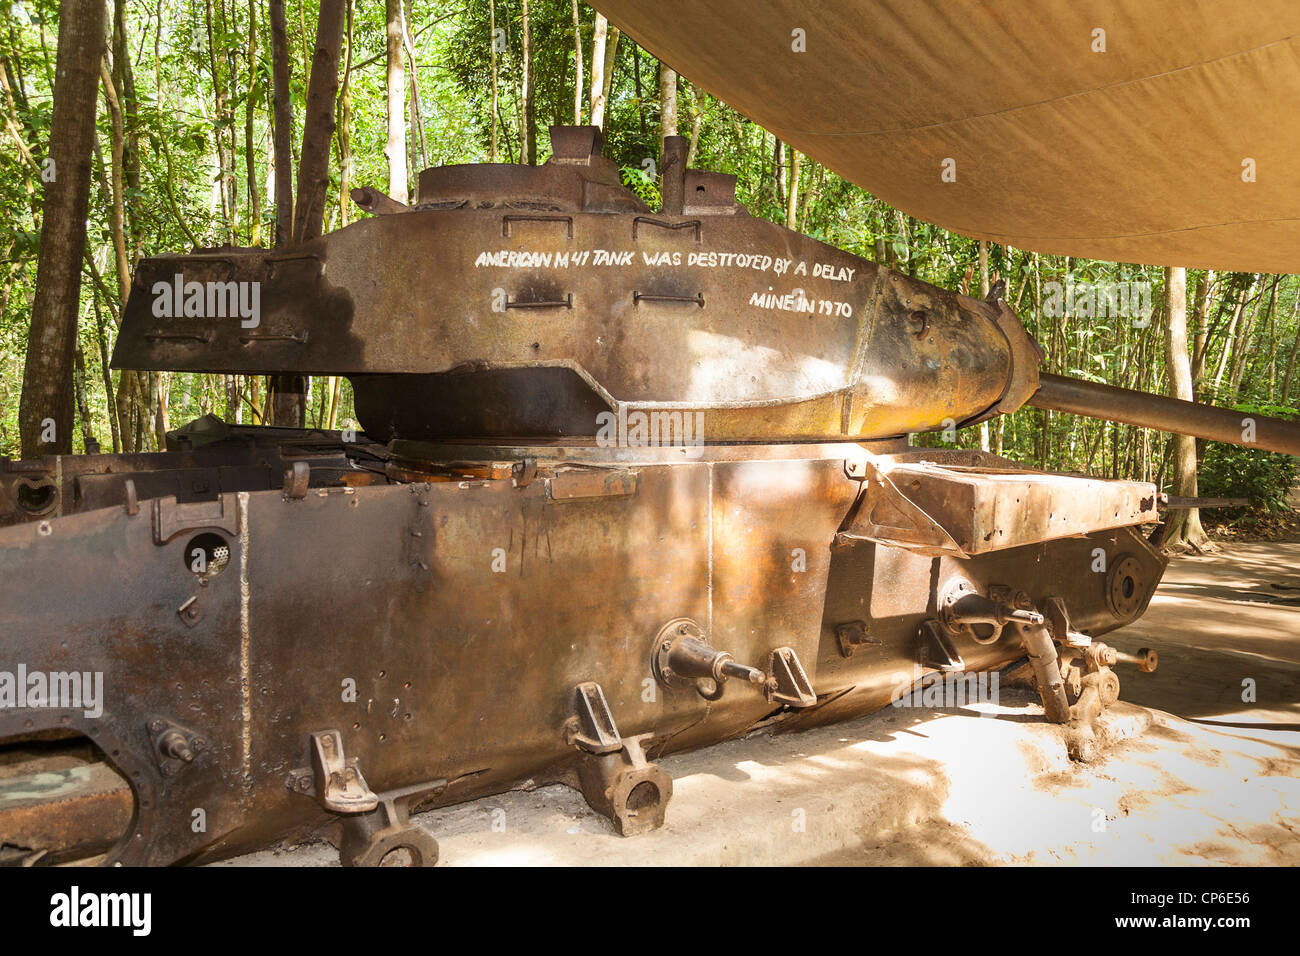 American M41 tank destroyed during the Vietnam War, Ben Dinh, Cu Chi, near Ho Chi Minh City, (Saigon), Vietnam Stock Photo